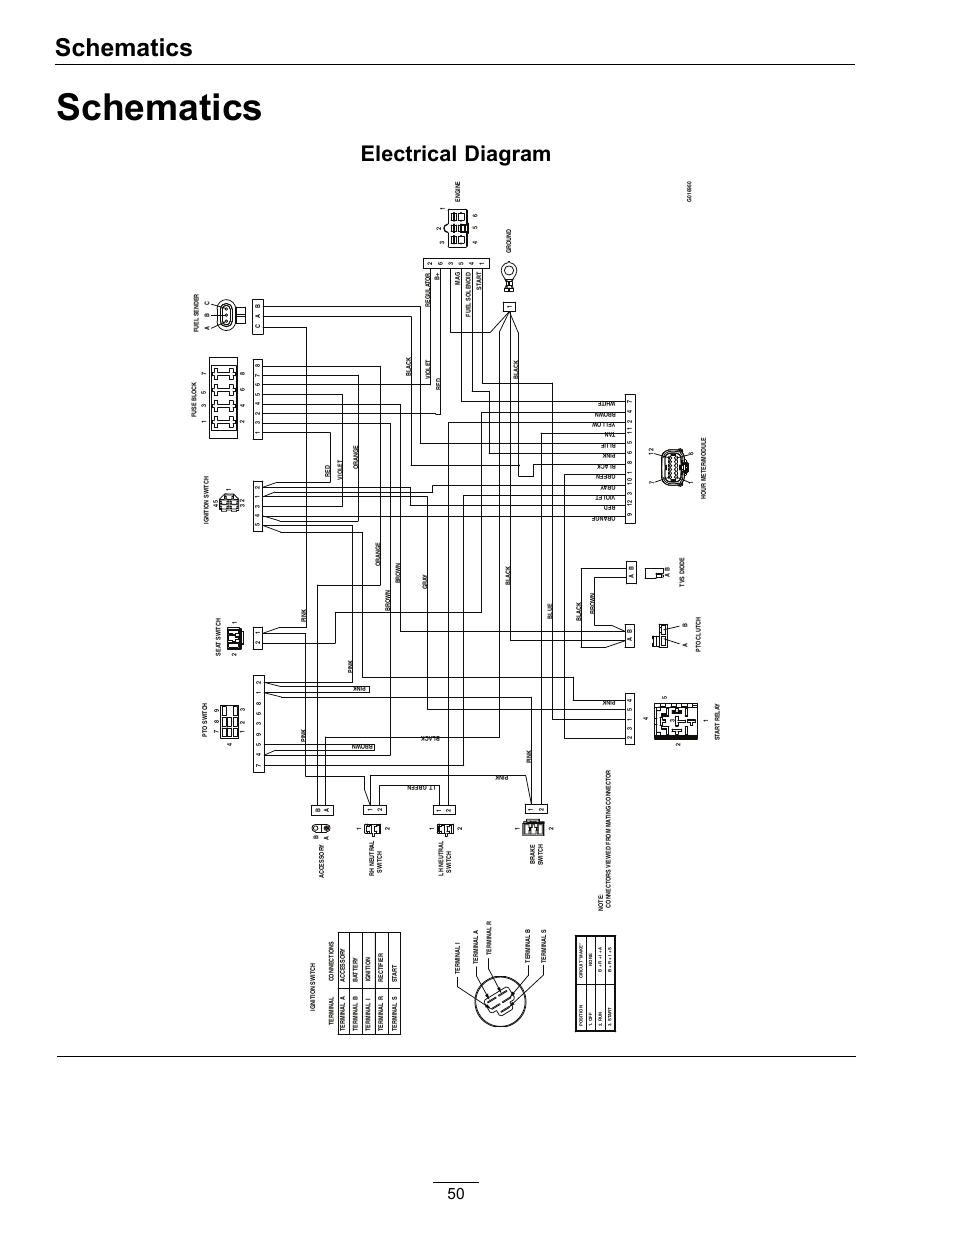 pacbrake exhaust brake installation instructions wiring diagram